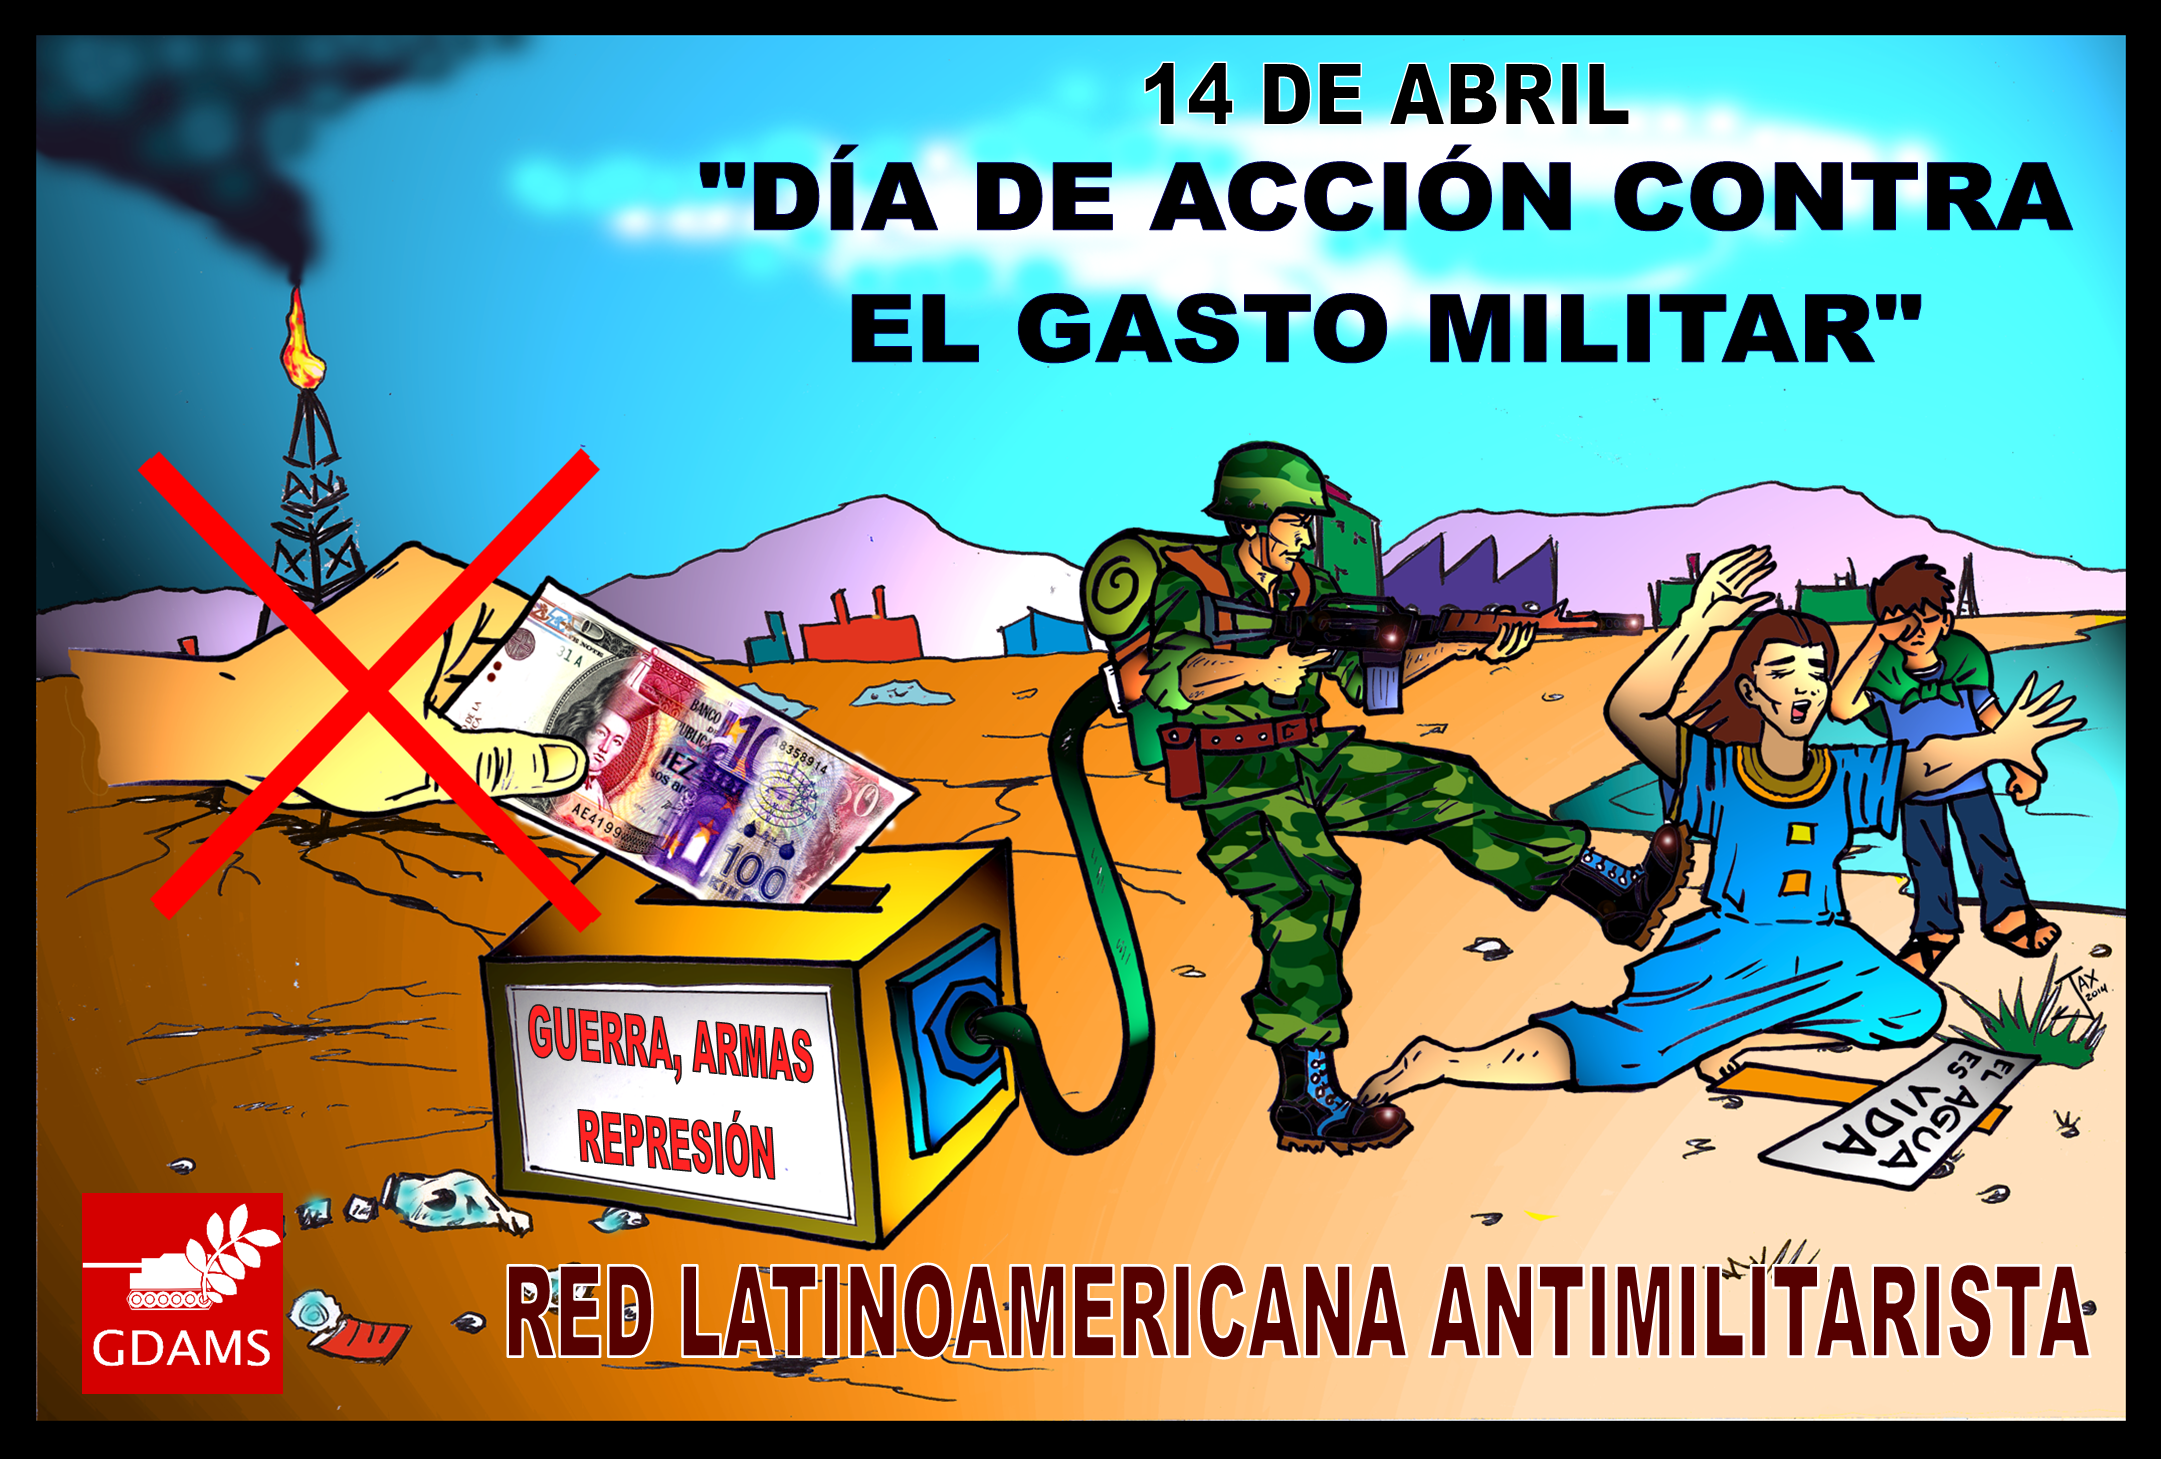 No queremos más armas para Latinoamérica